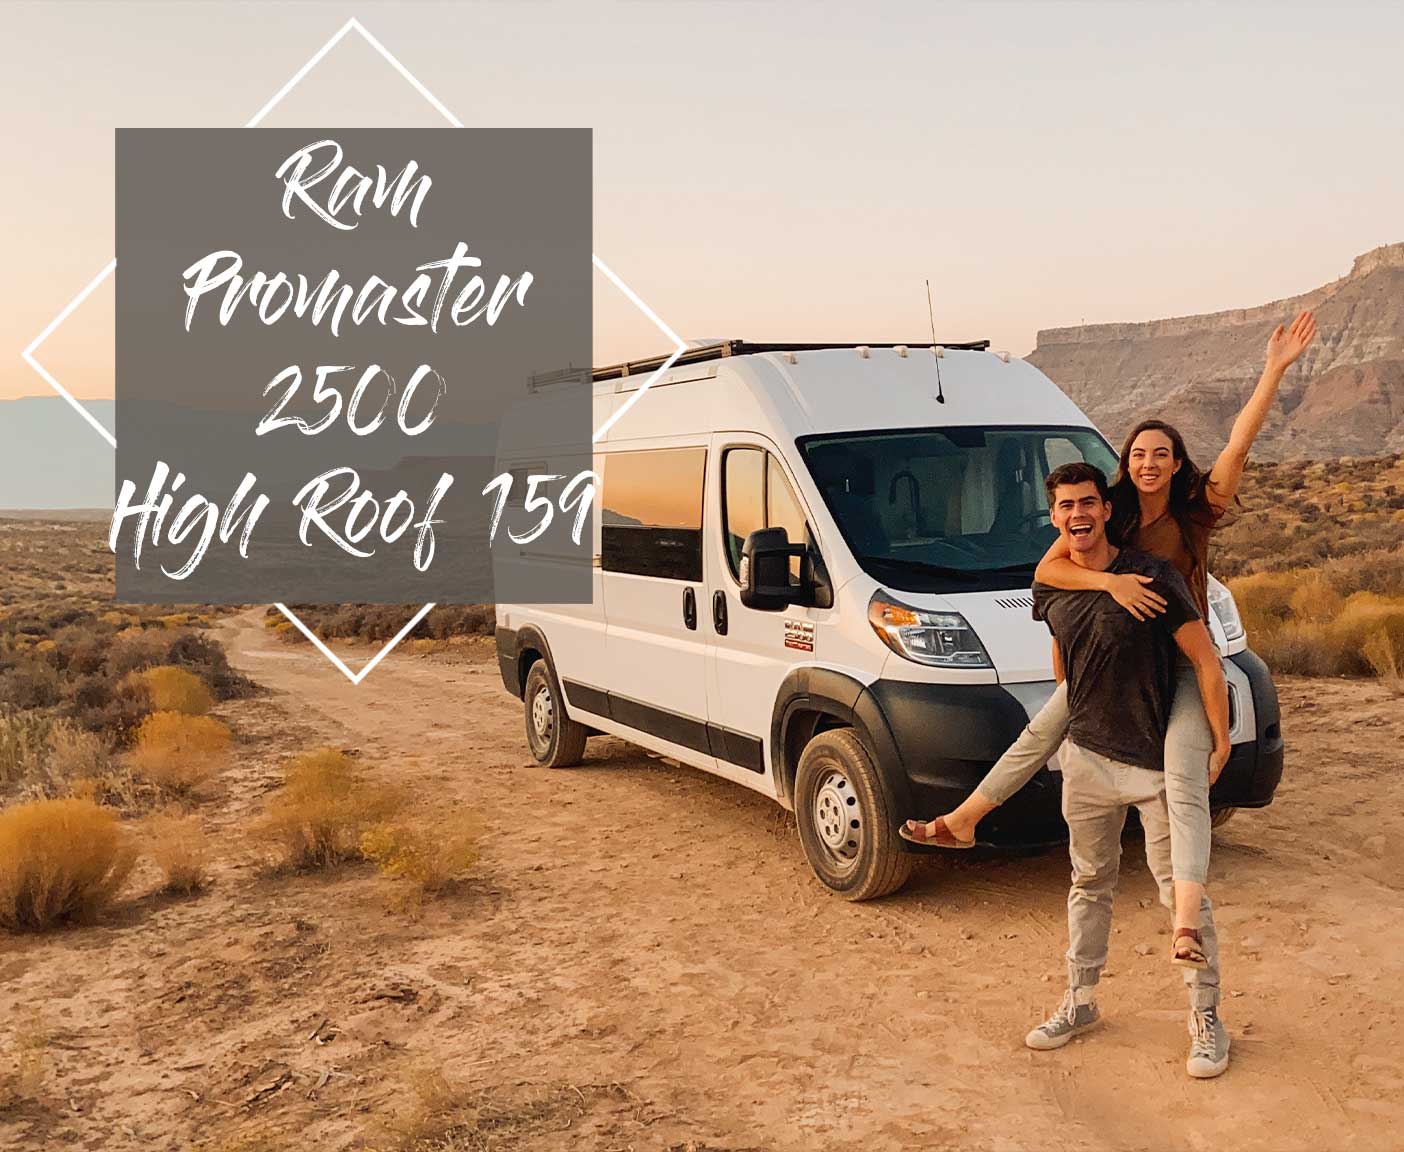 Ram Promaster 2500 High Roof 159 - a van instead of a wedding